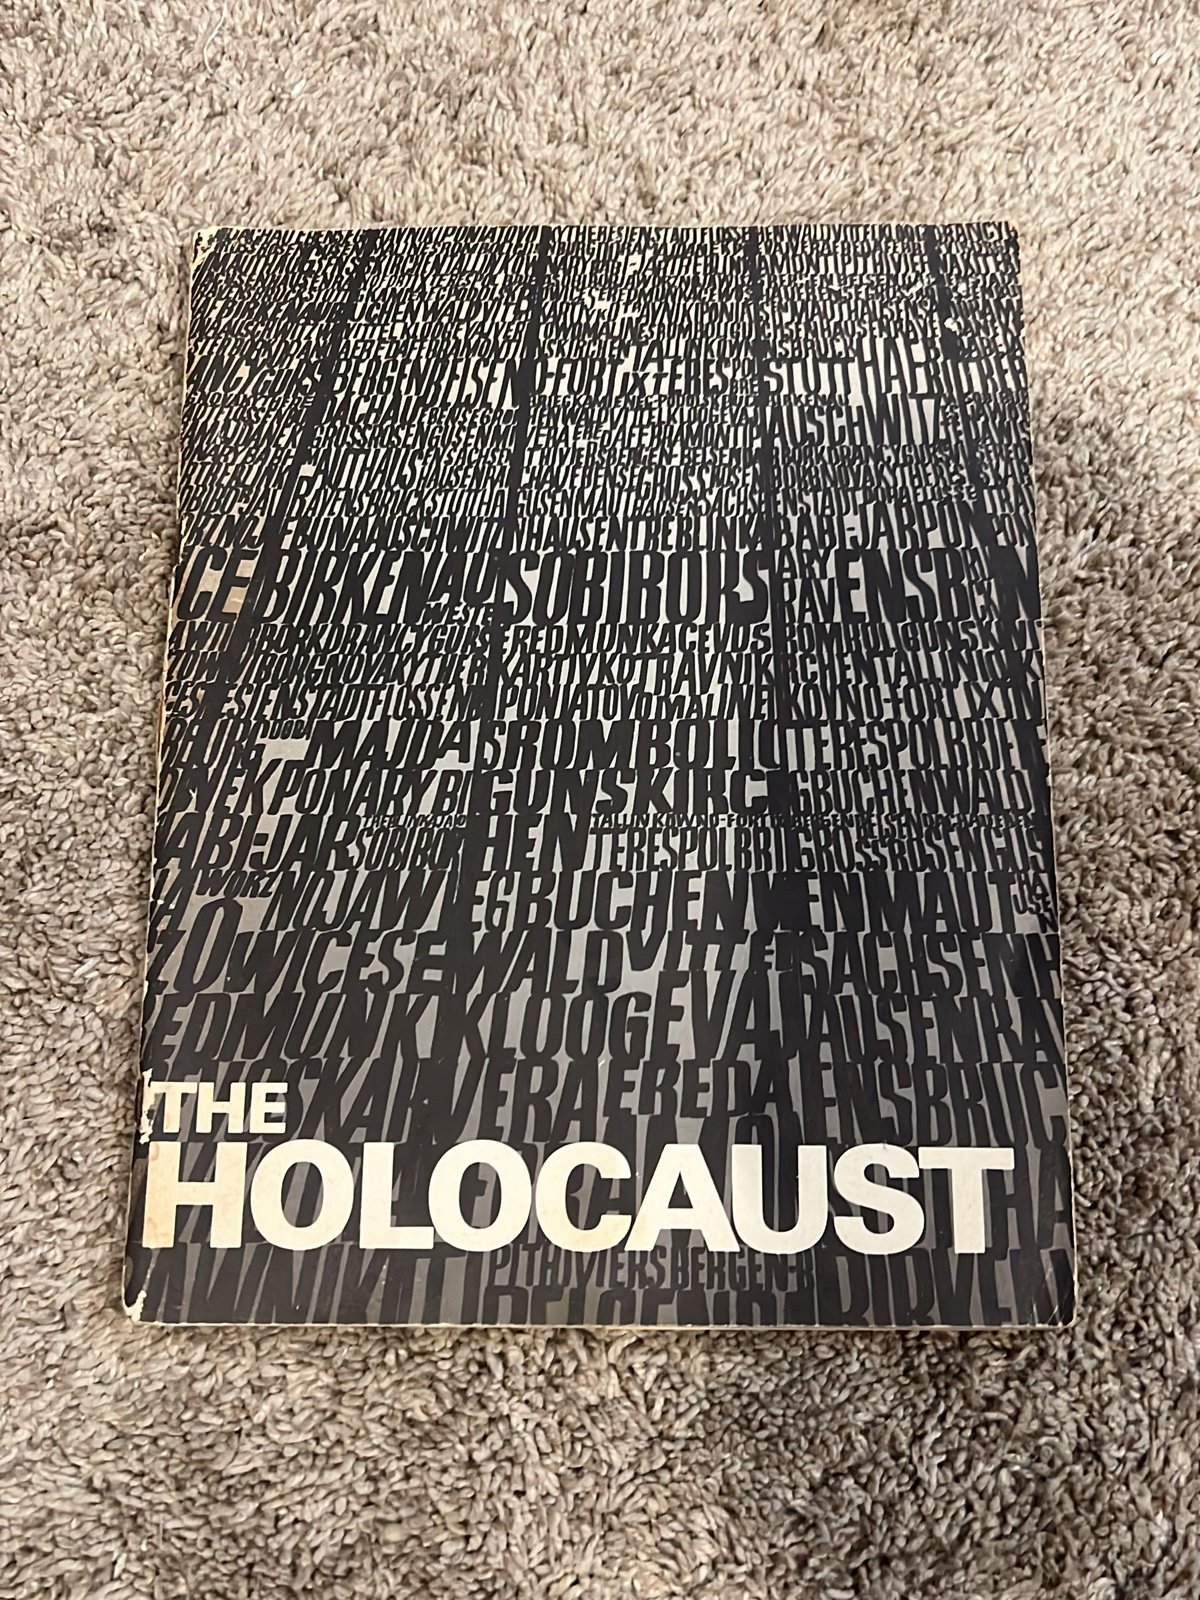 Holocaust magazine 1975 He36vWzEA